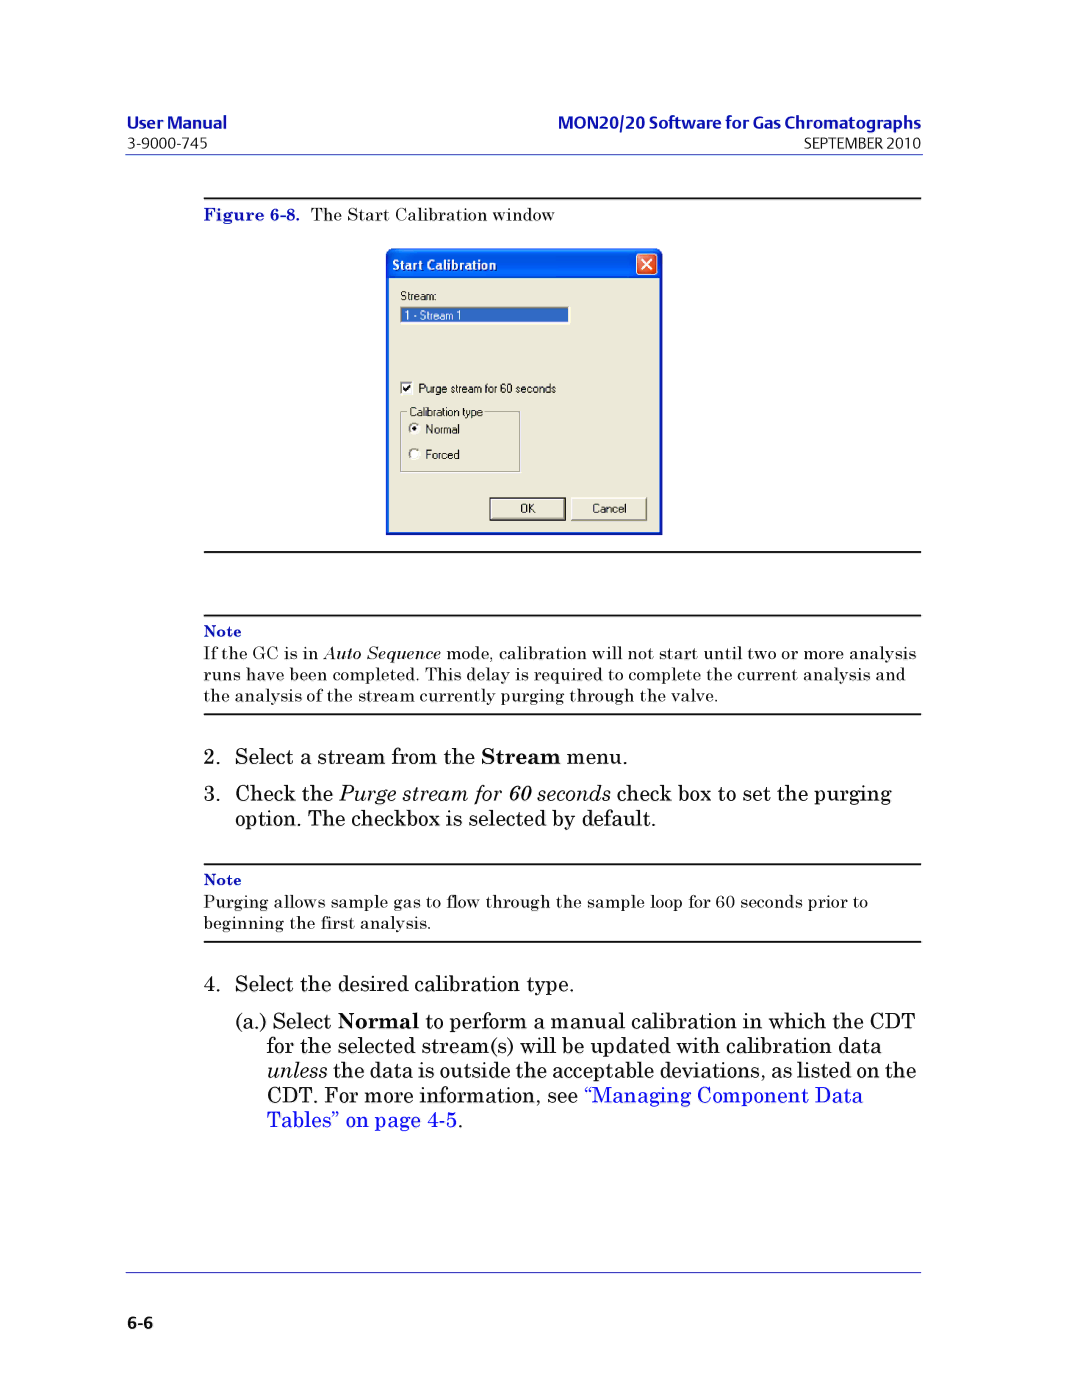 Emerson Process Management 3-9000-745 manual Start Calibration window 